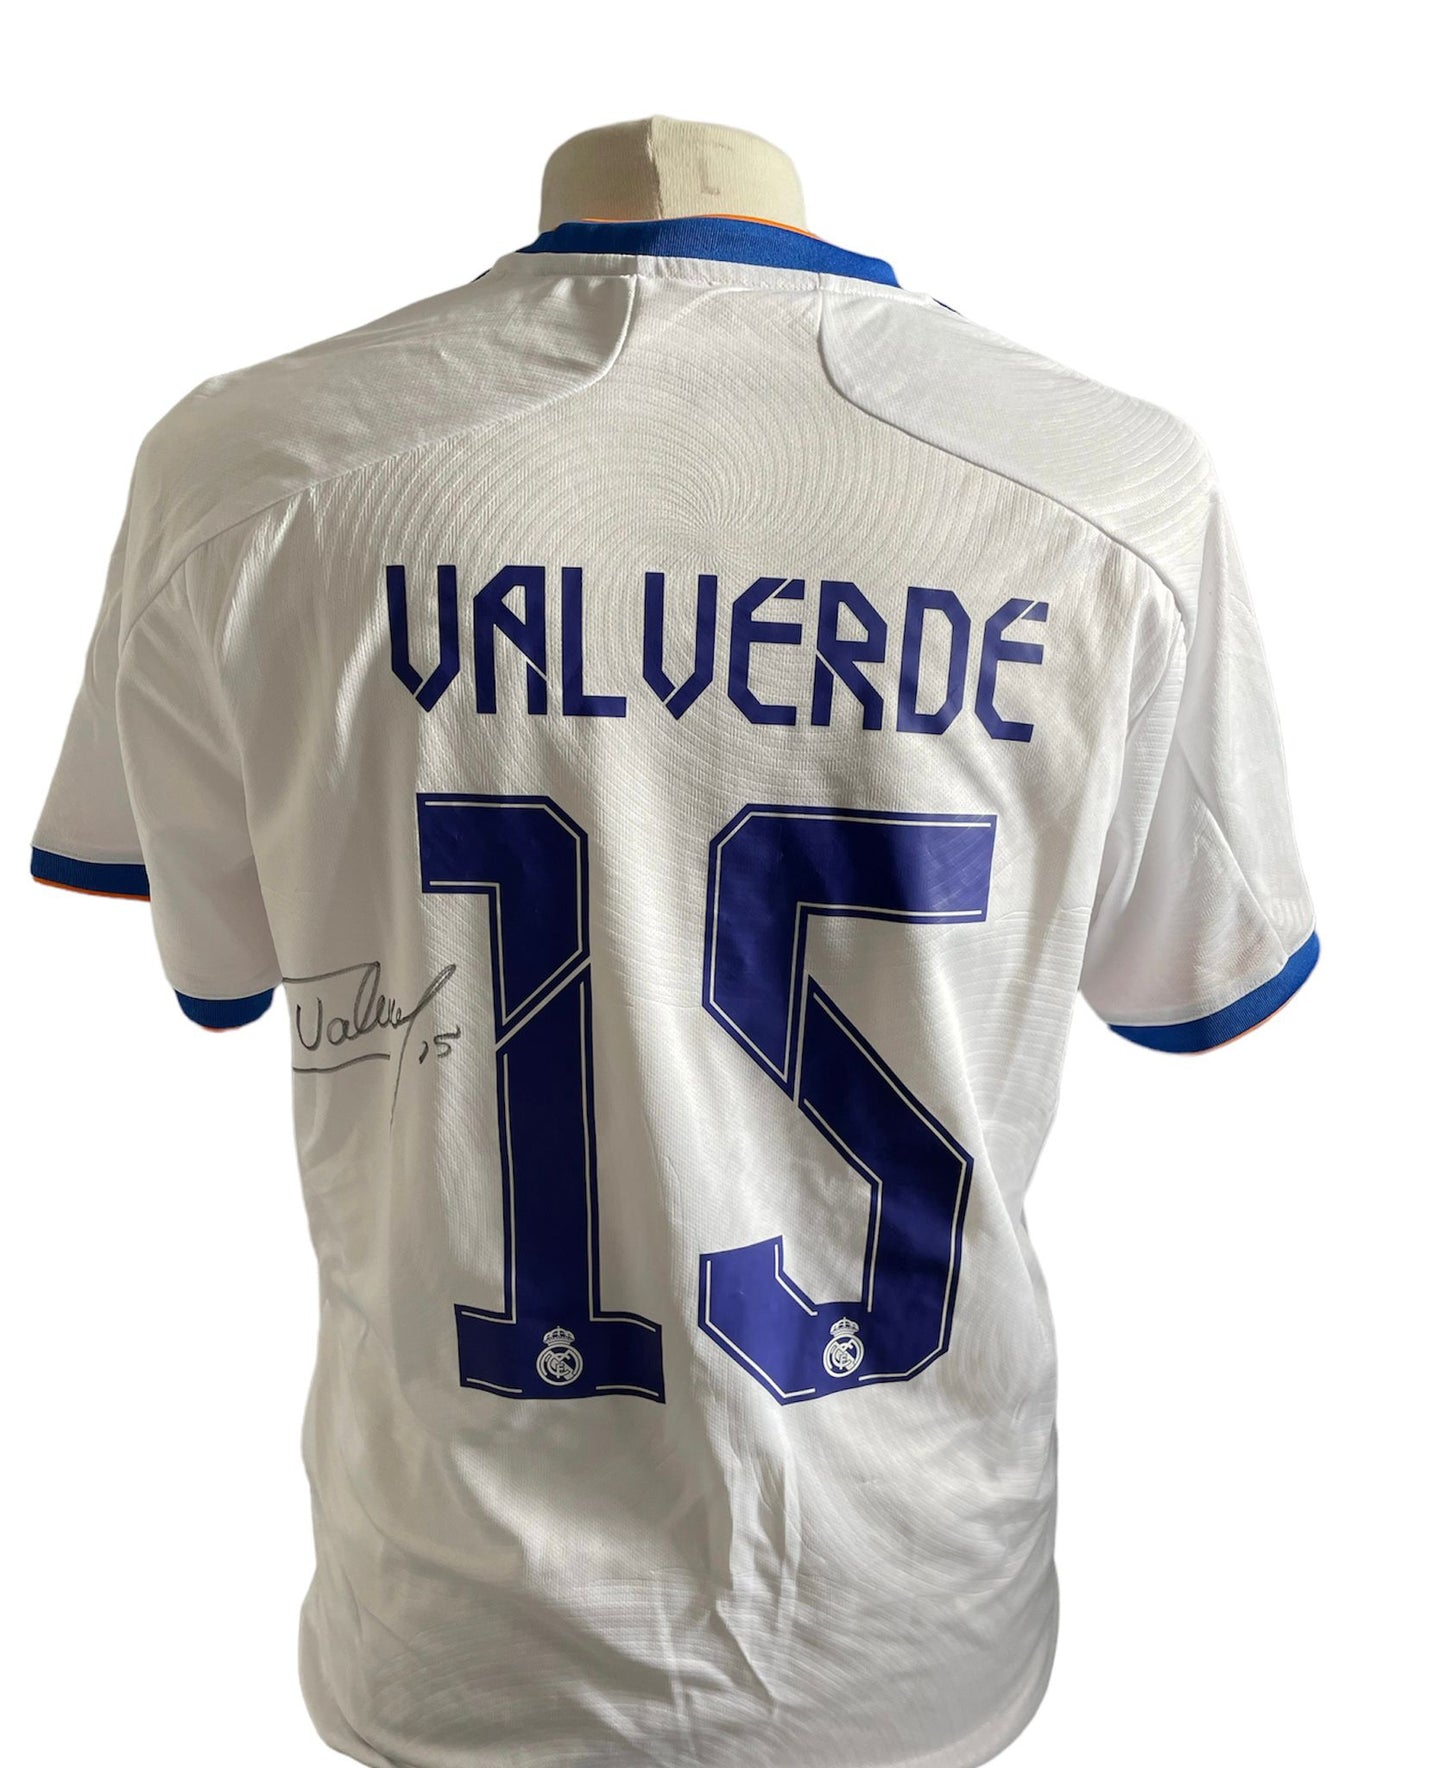 Federico Valverde gesigneerd Real Madrid 2021-2022 met fotobewijs.